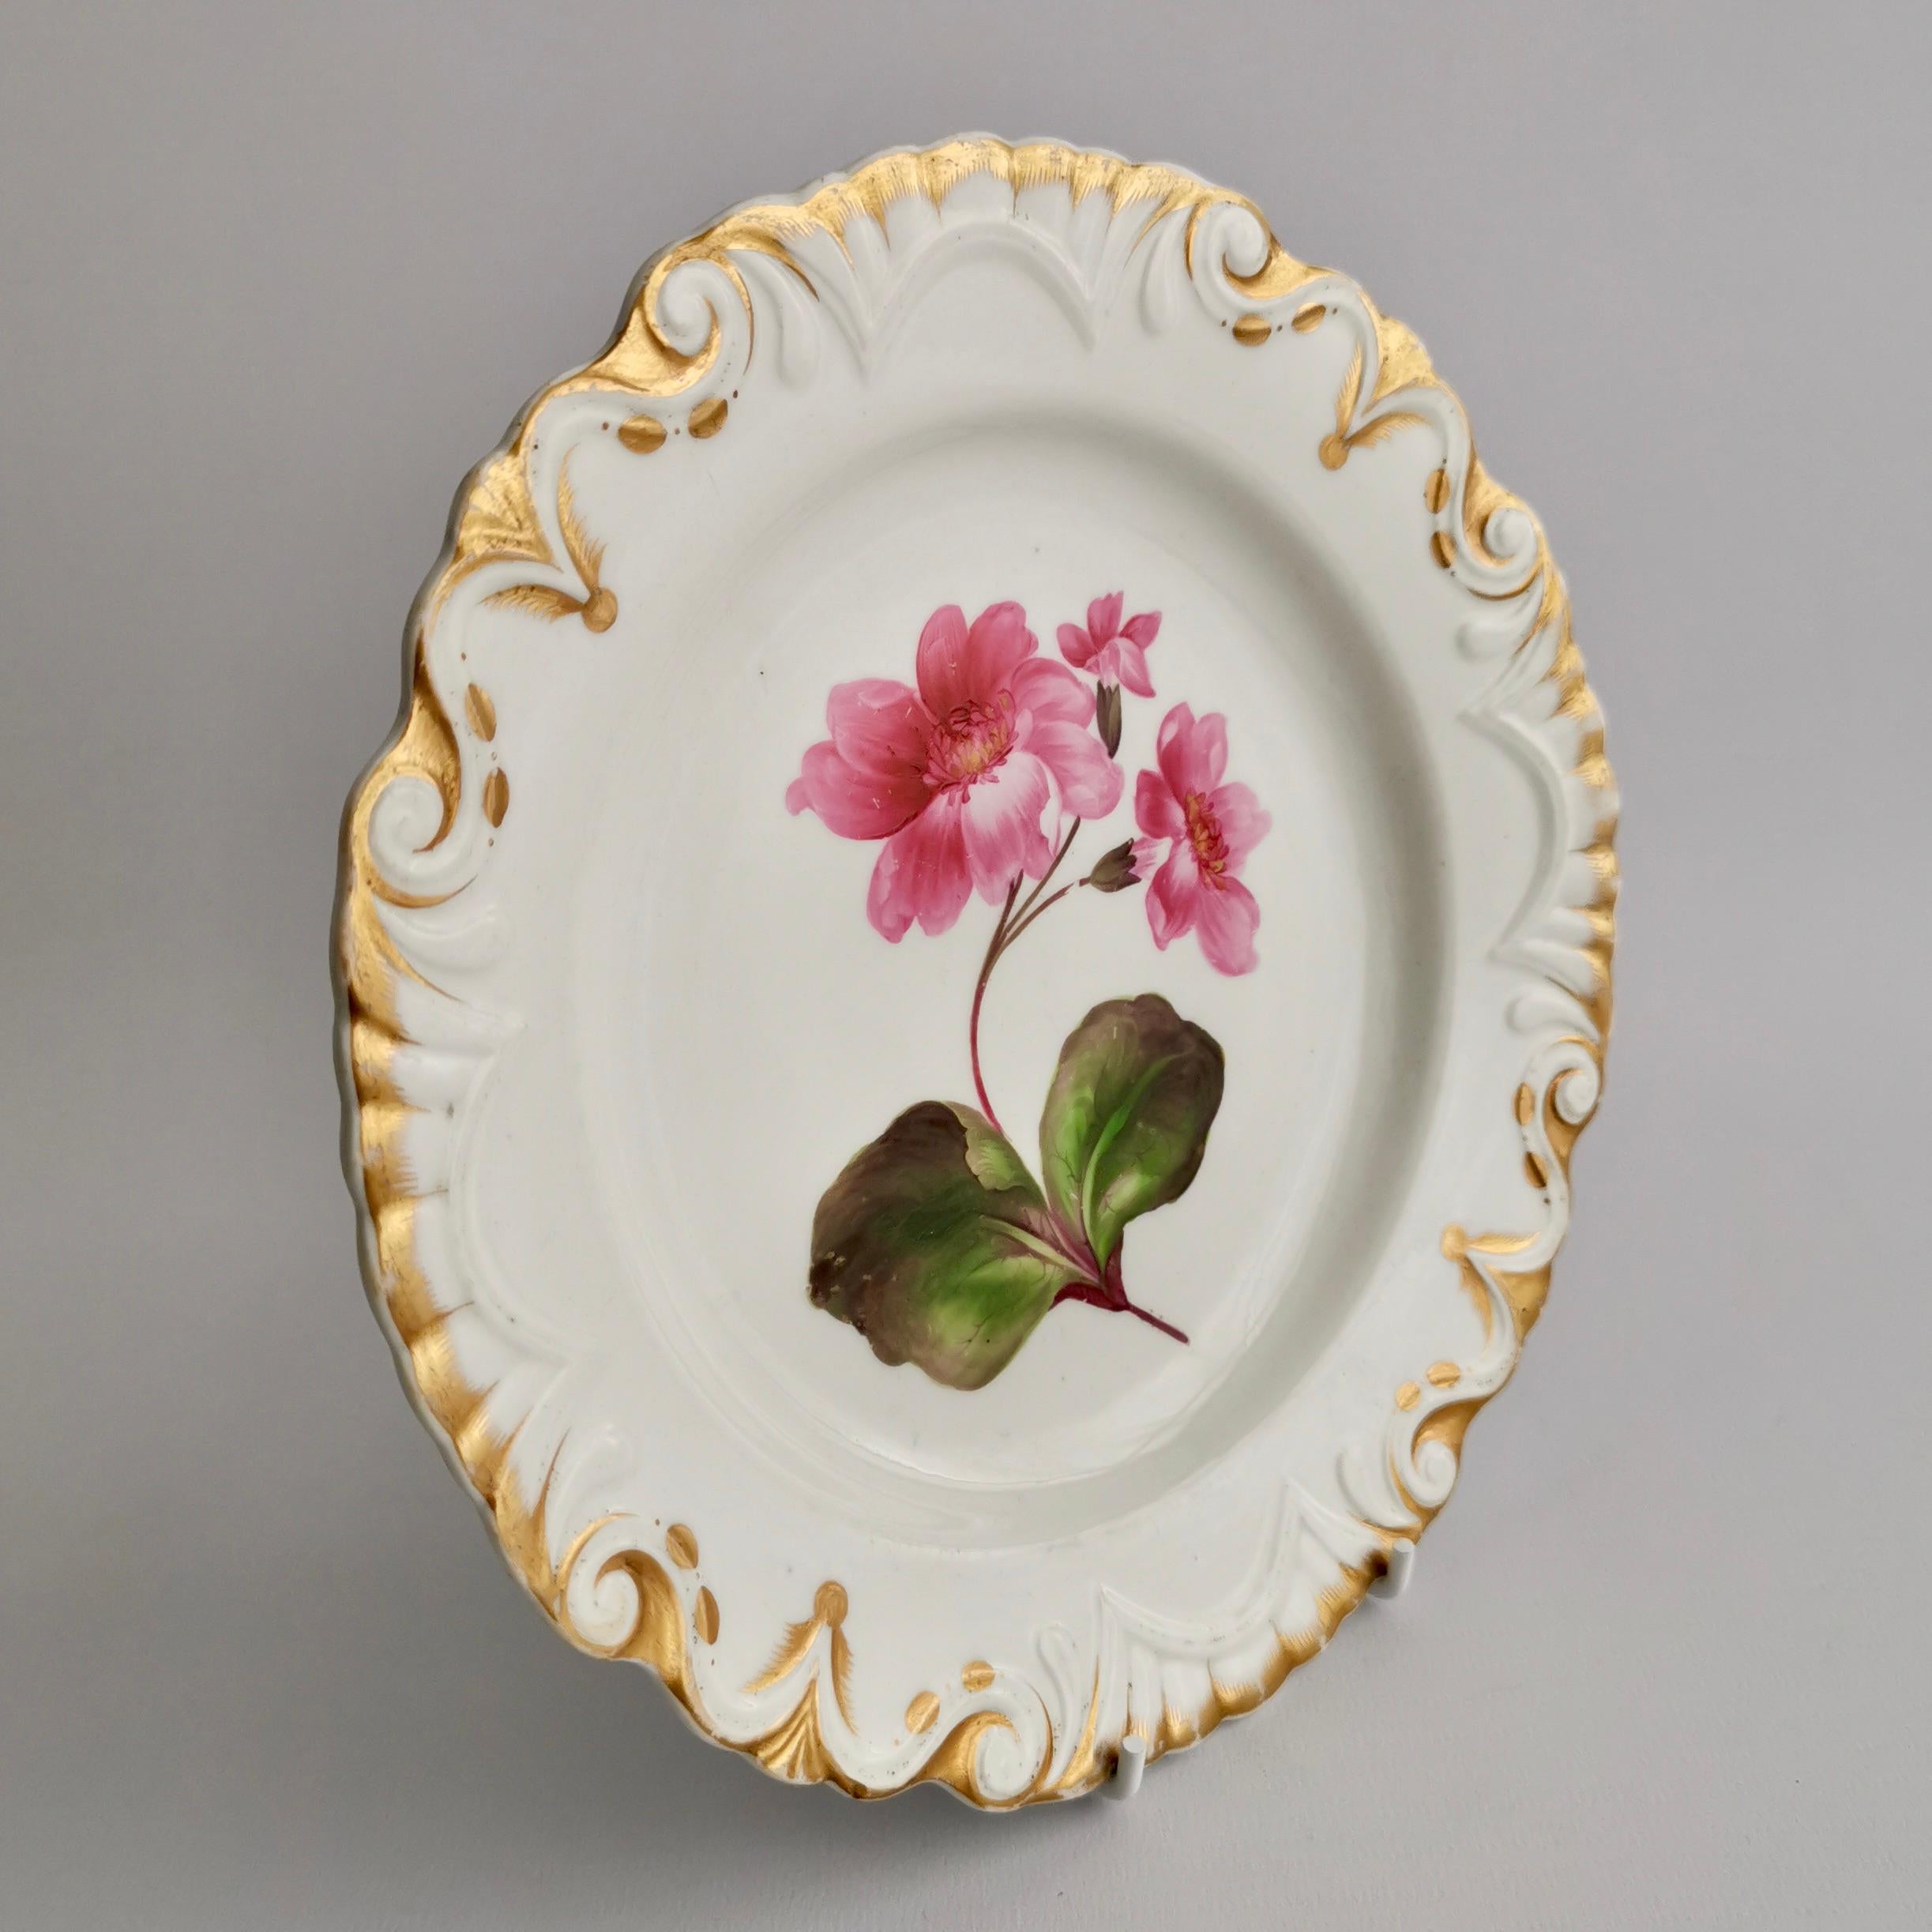 Machin Porcelain Plate, White, Moustache Shape with Pink Flower, Regency 3